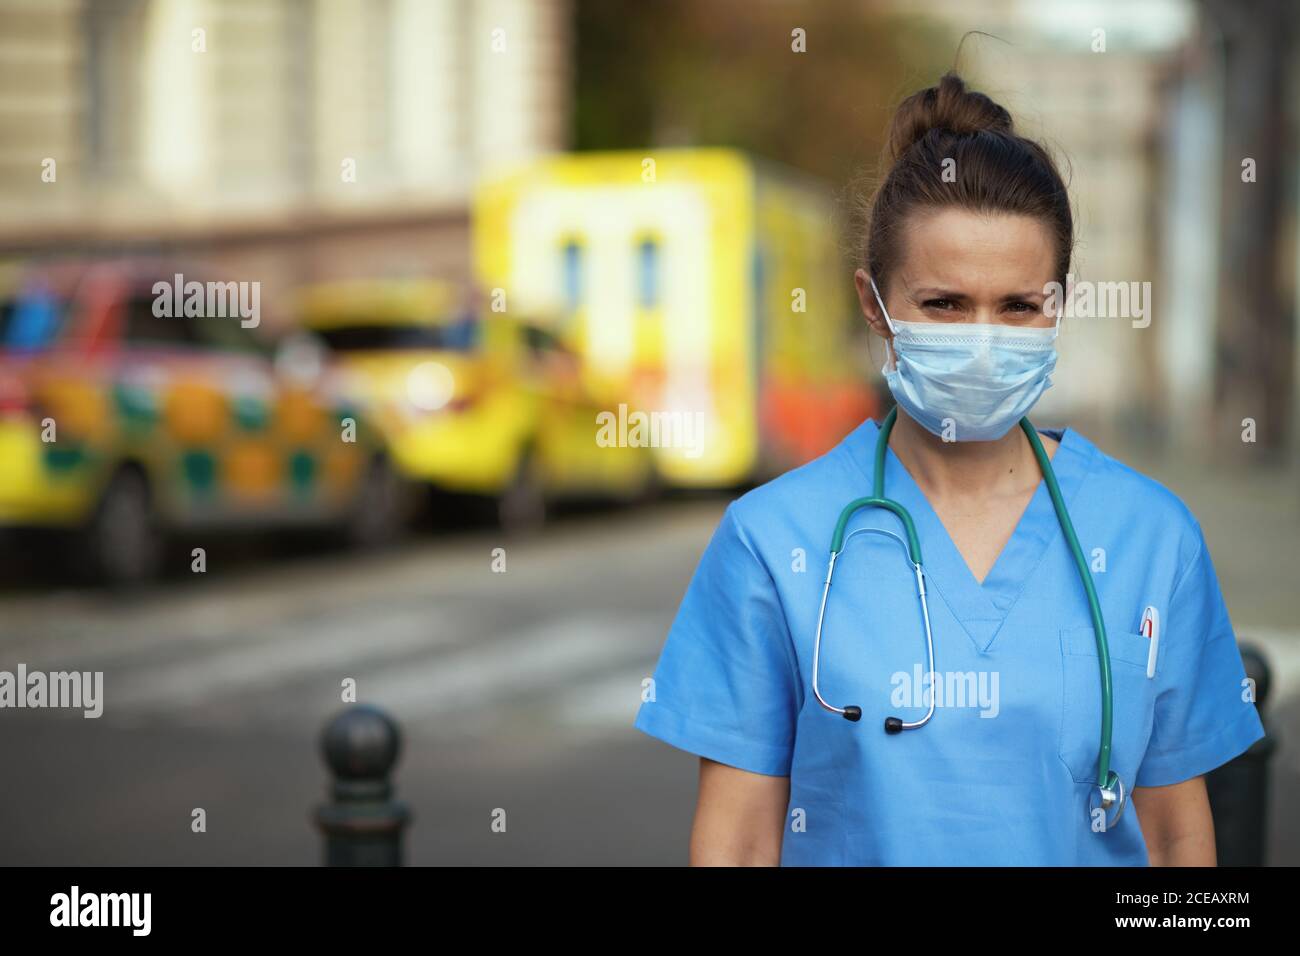 coronavirus pandemic. Portrait of modern paramedic woman in uniform with stethoscope and medical mask outside near ambulance. Stock Photo